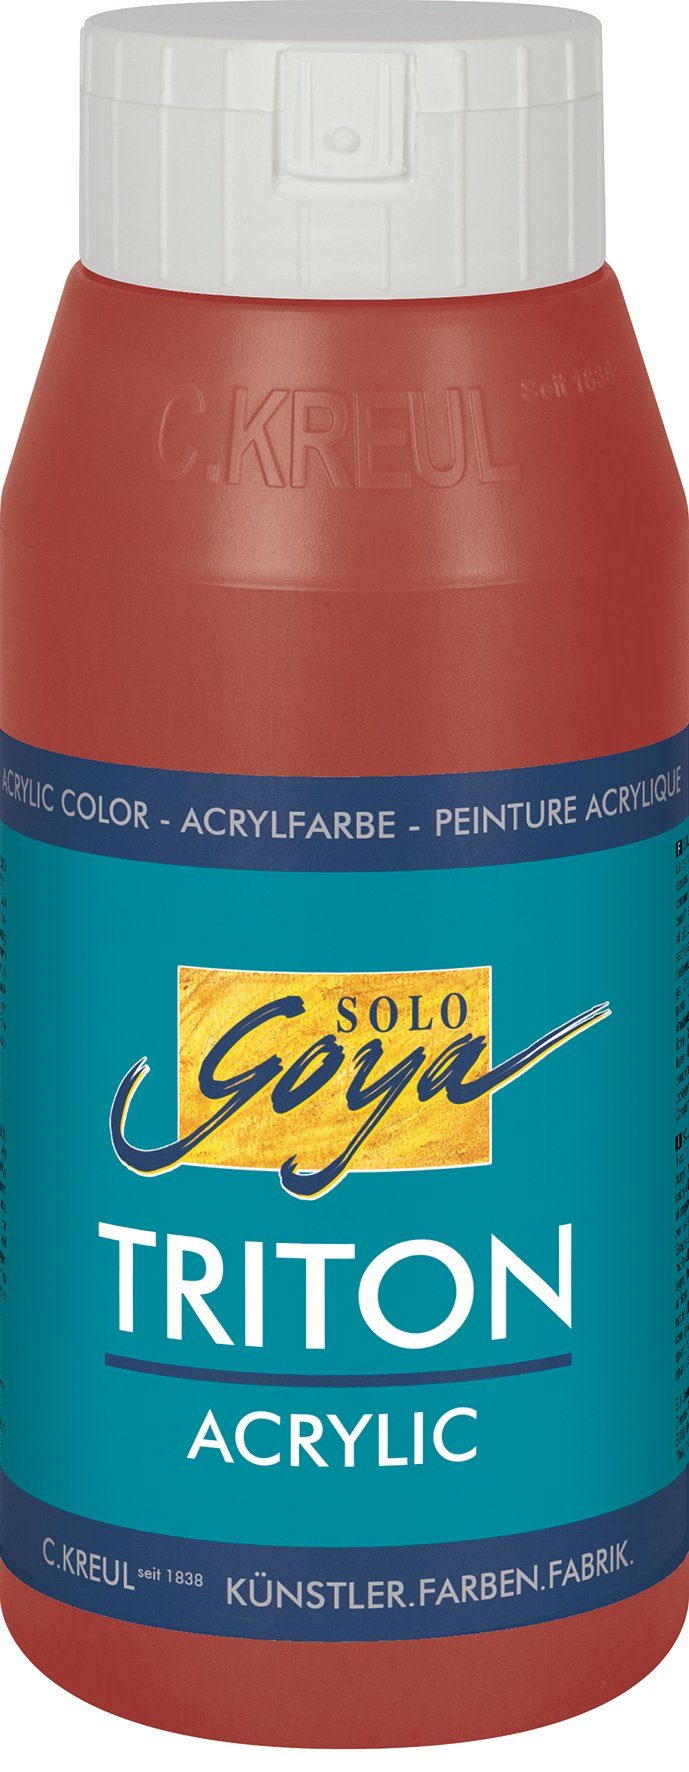 Kreul Acrylfarbe Solo Acrylic, Triton ml 750 Goya Oxydrot